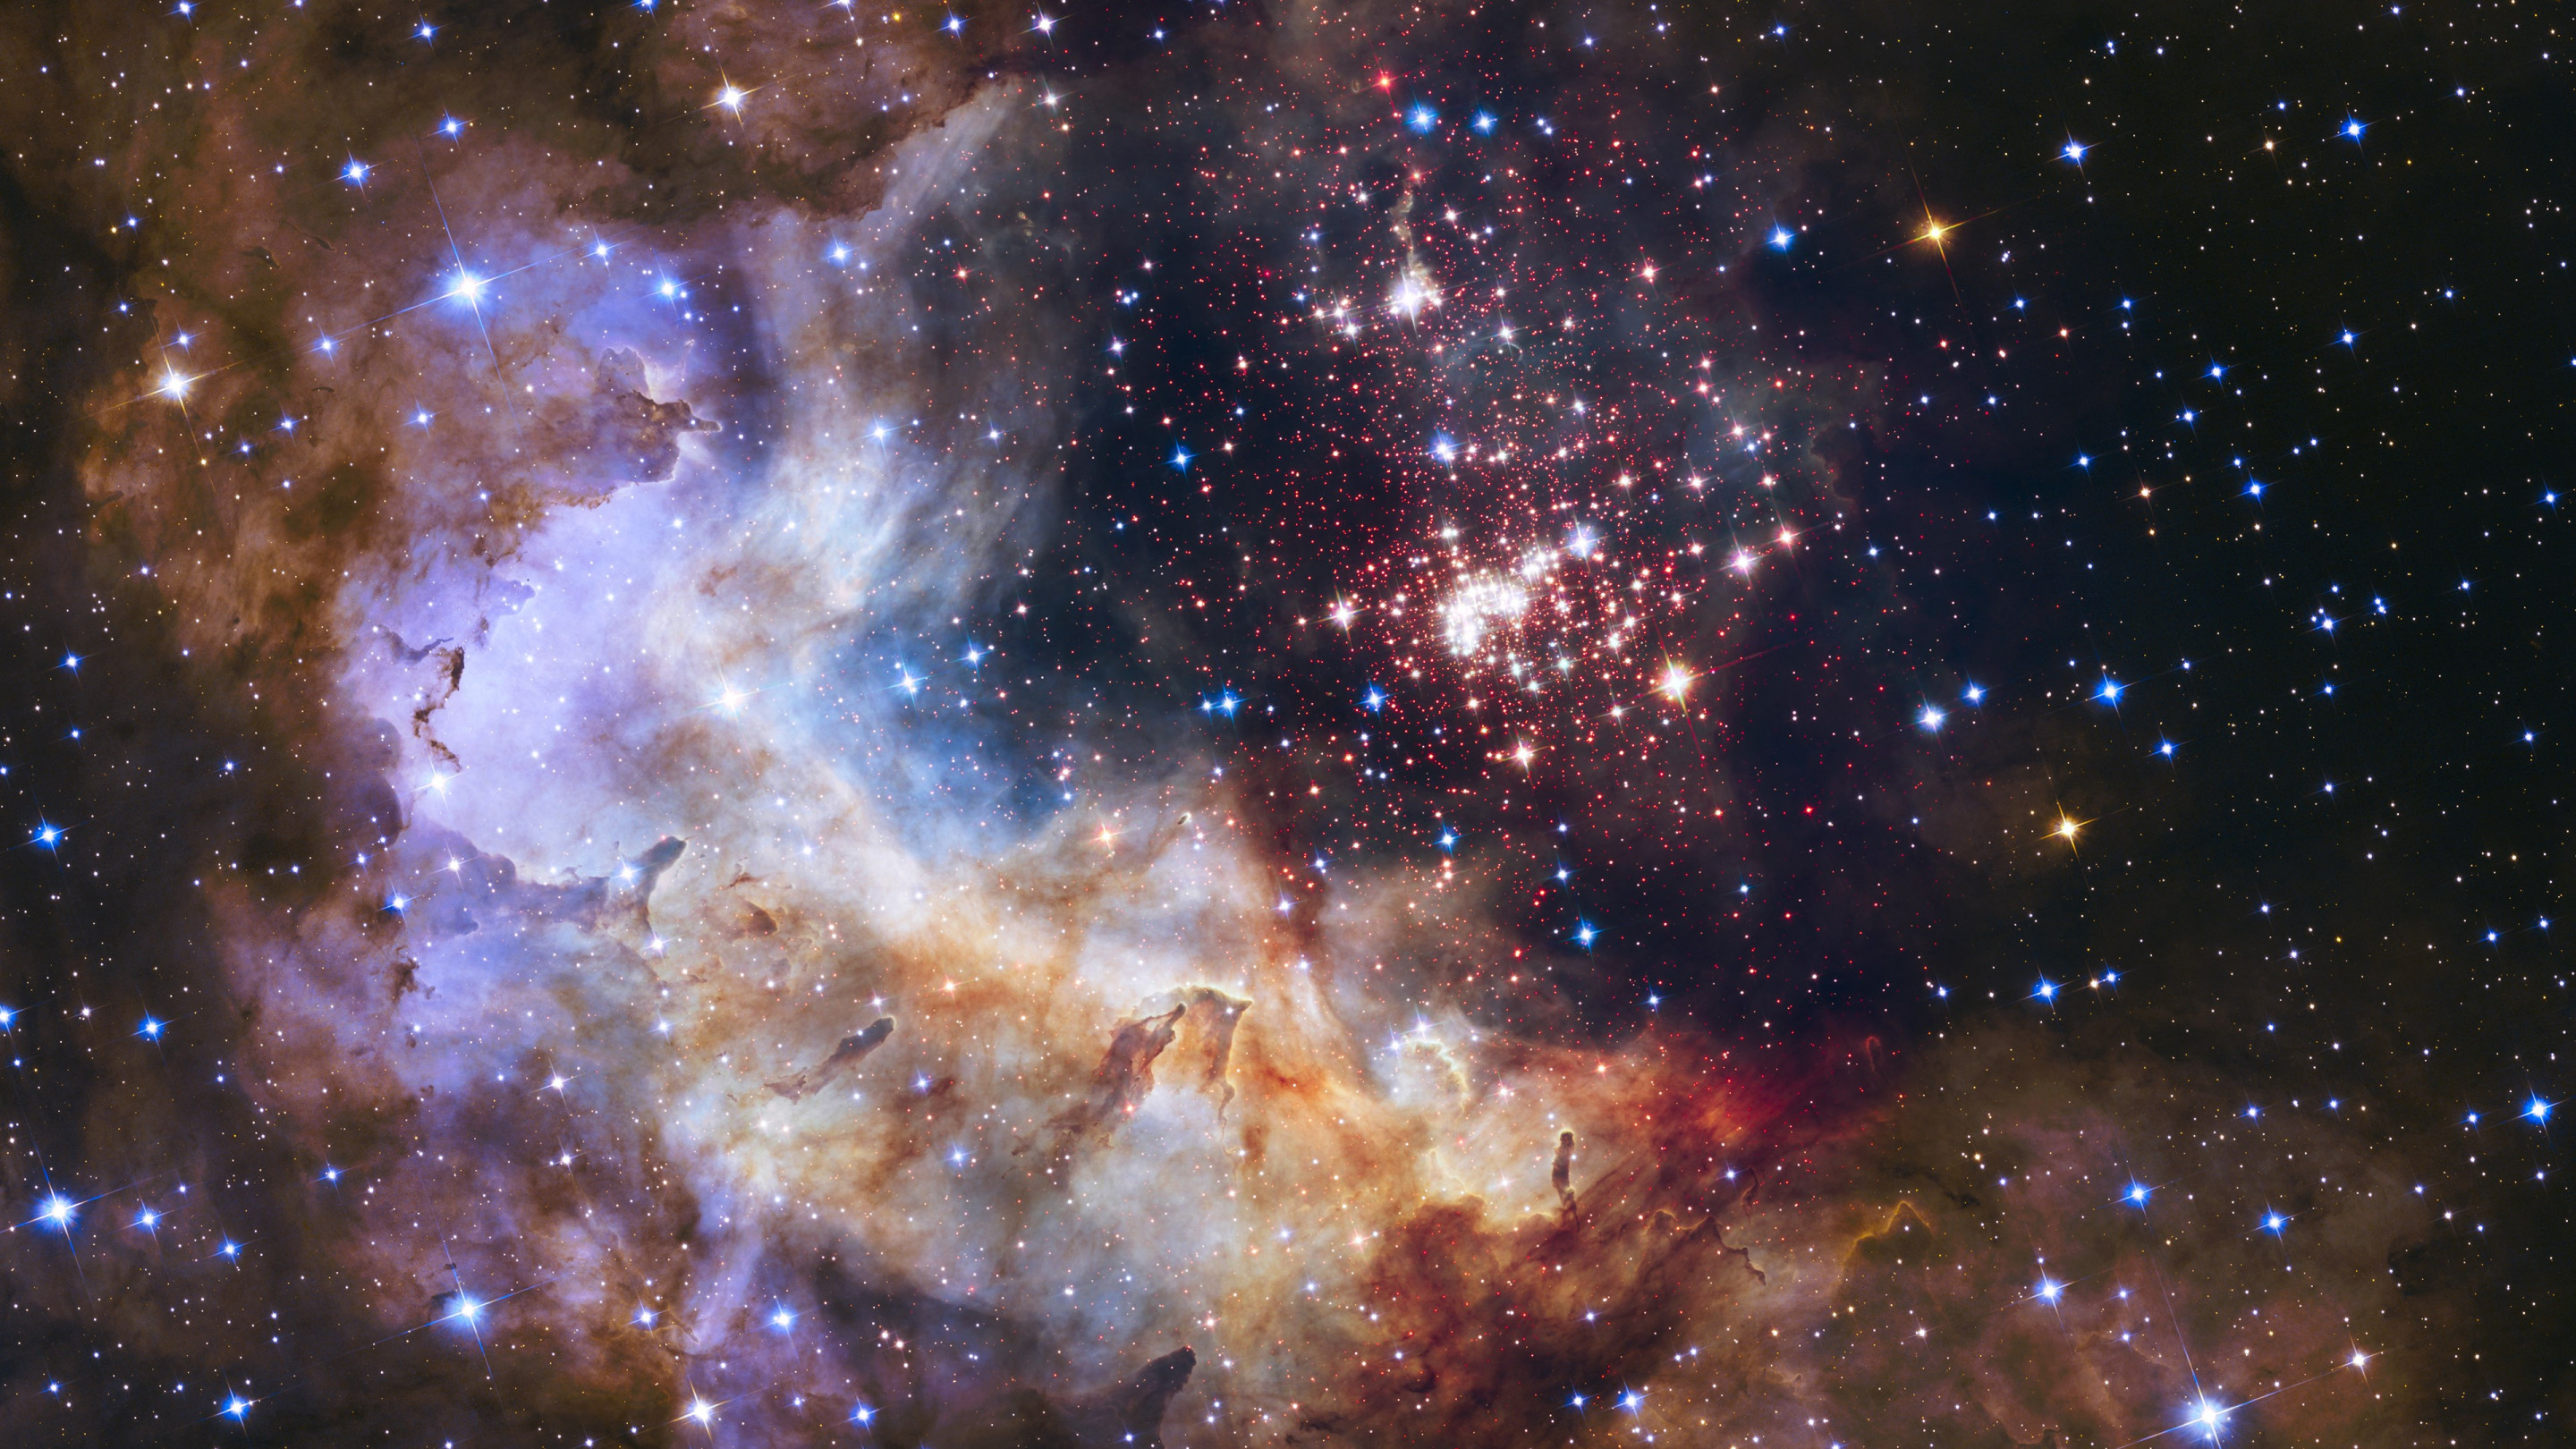 Universe seen through Hubble Space Telescope wallpaper 2880x1620